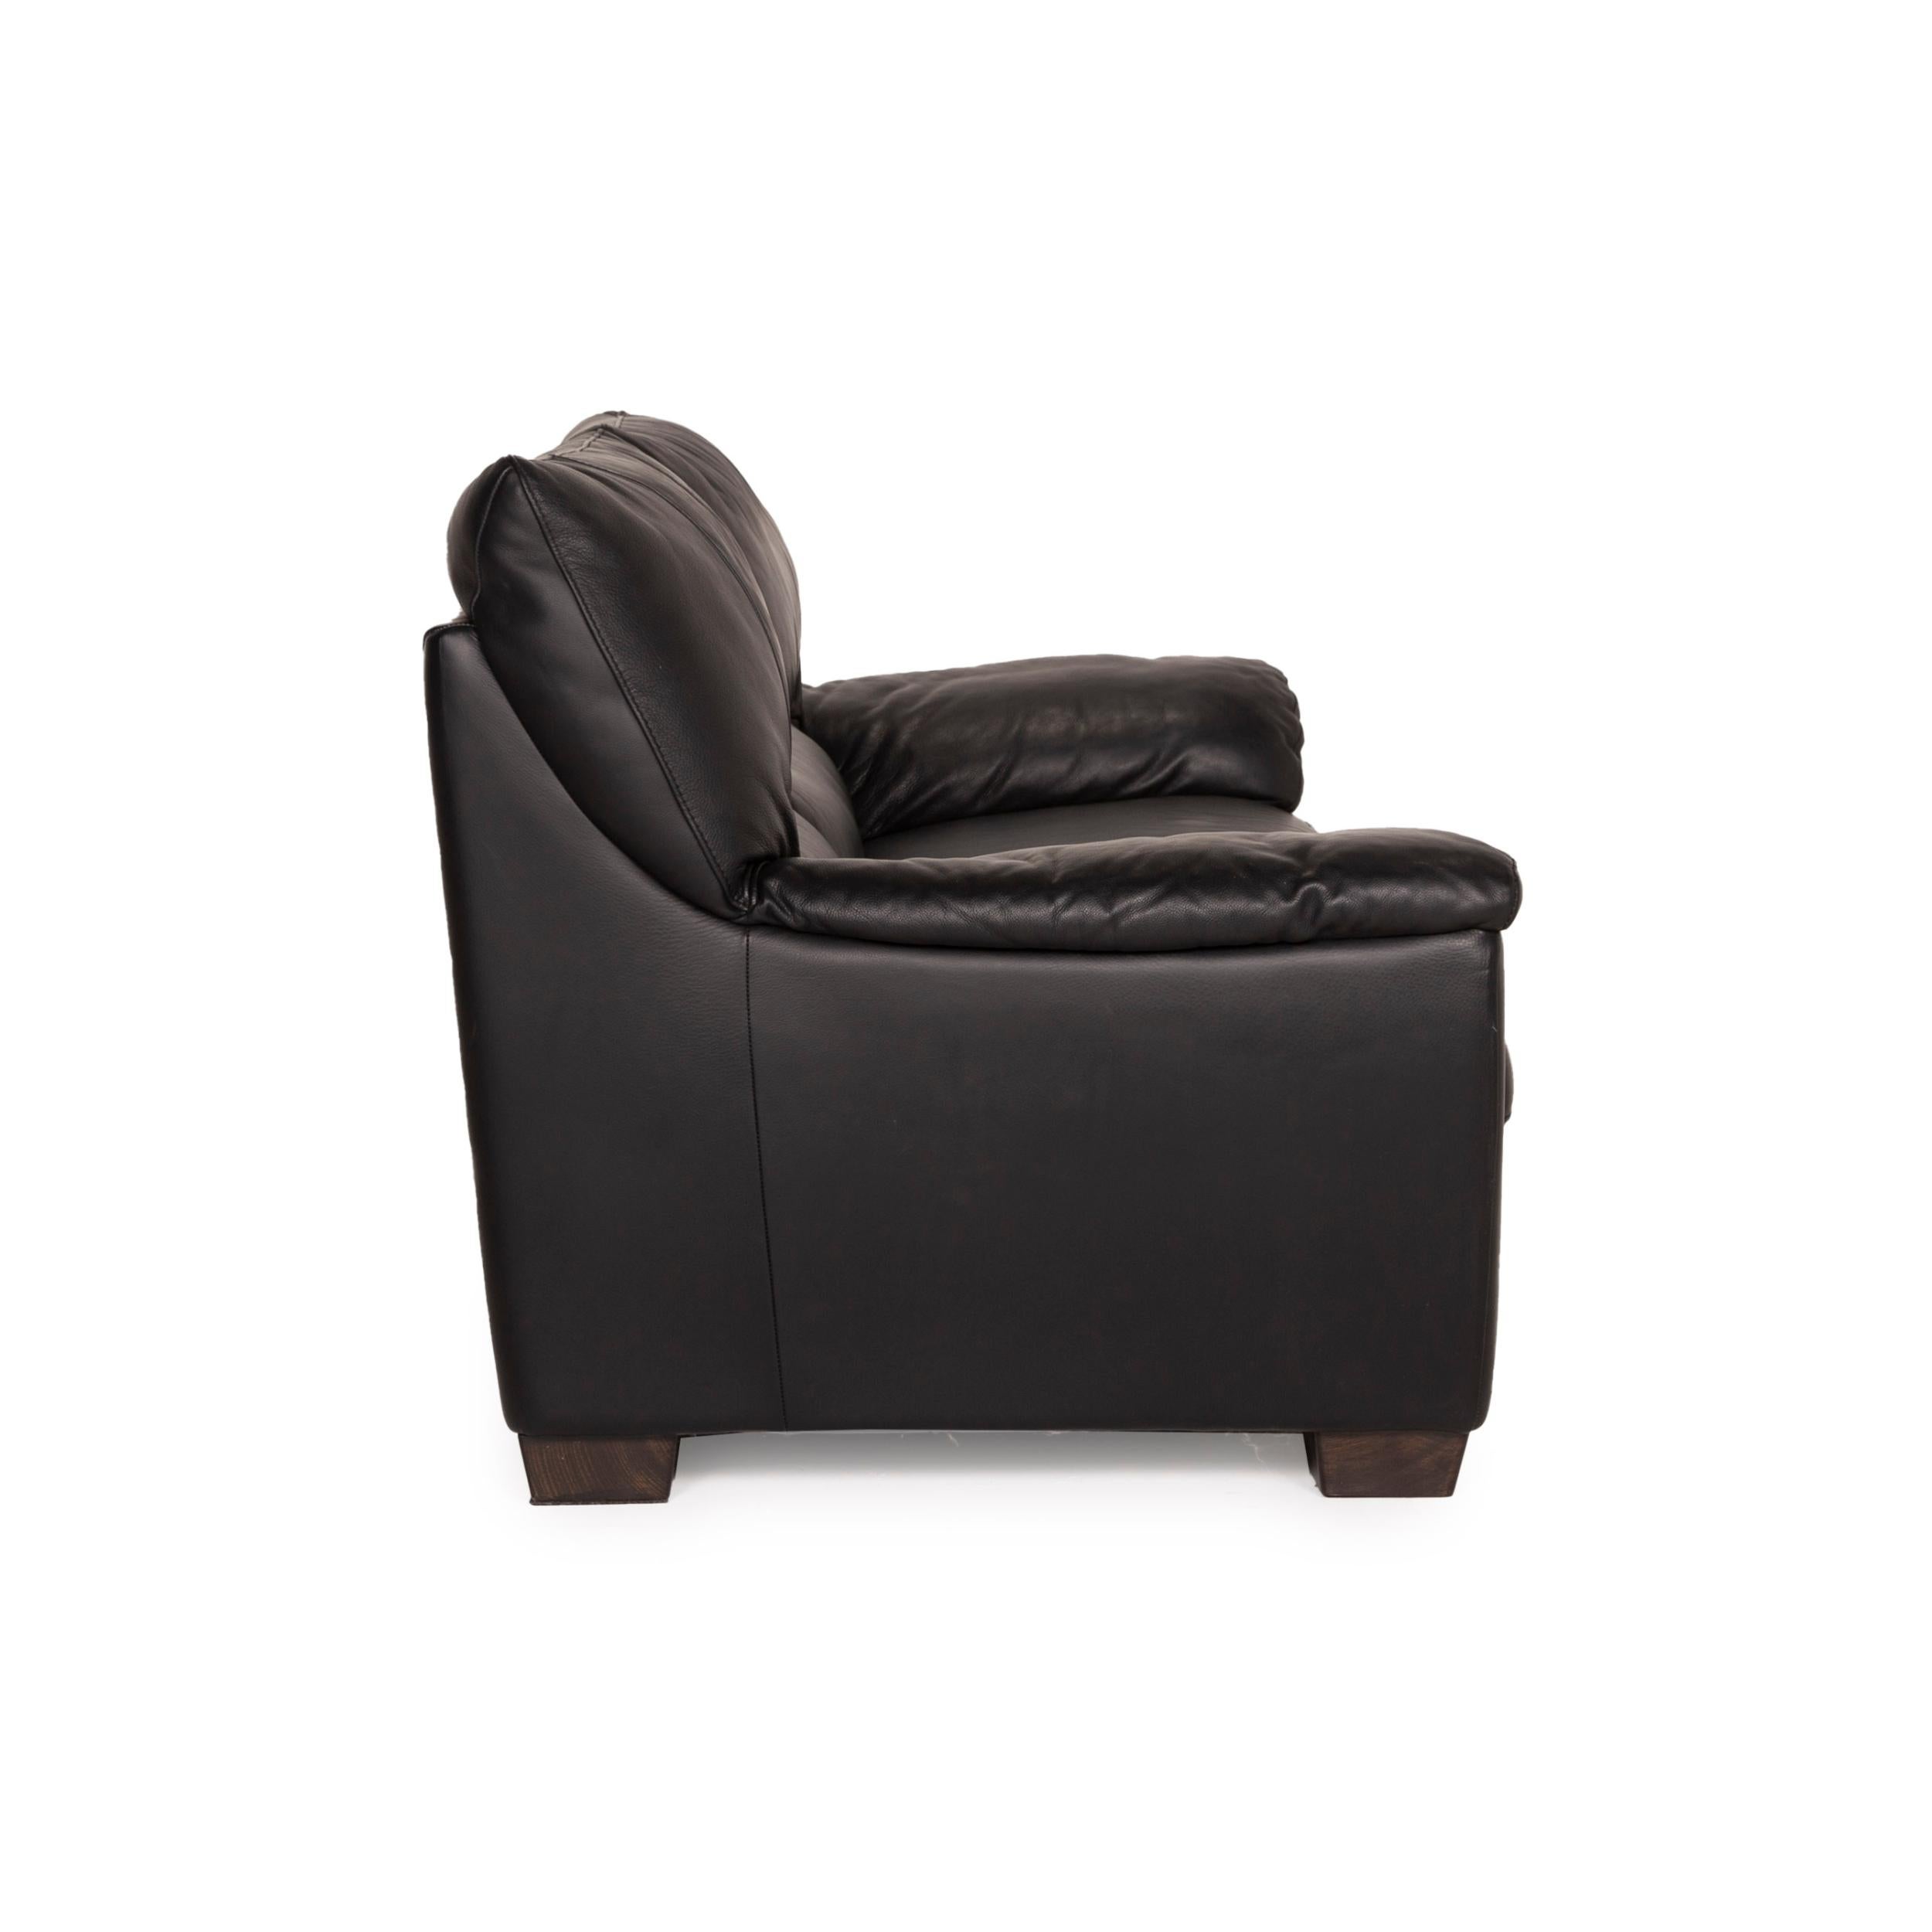 Contemporary Natuzzi Two-Seater Leather Sofa Black